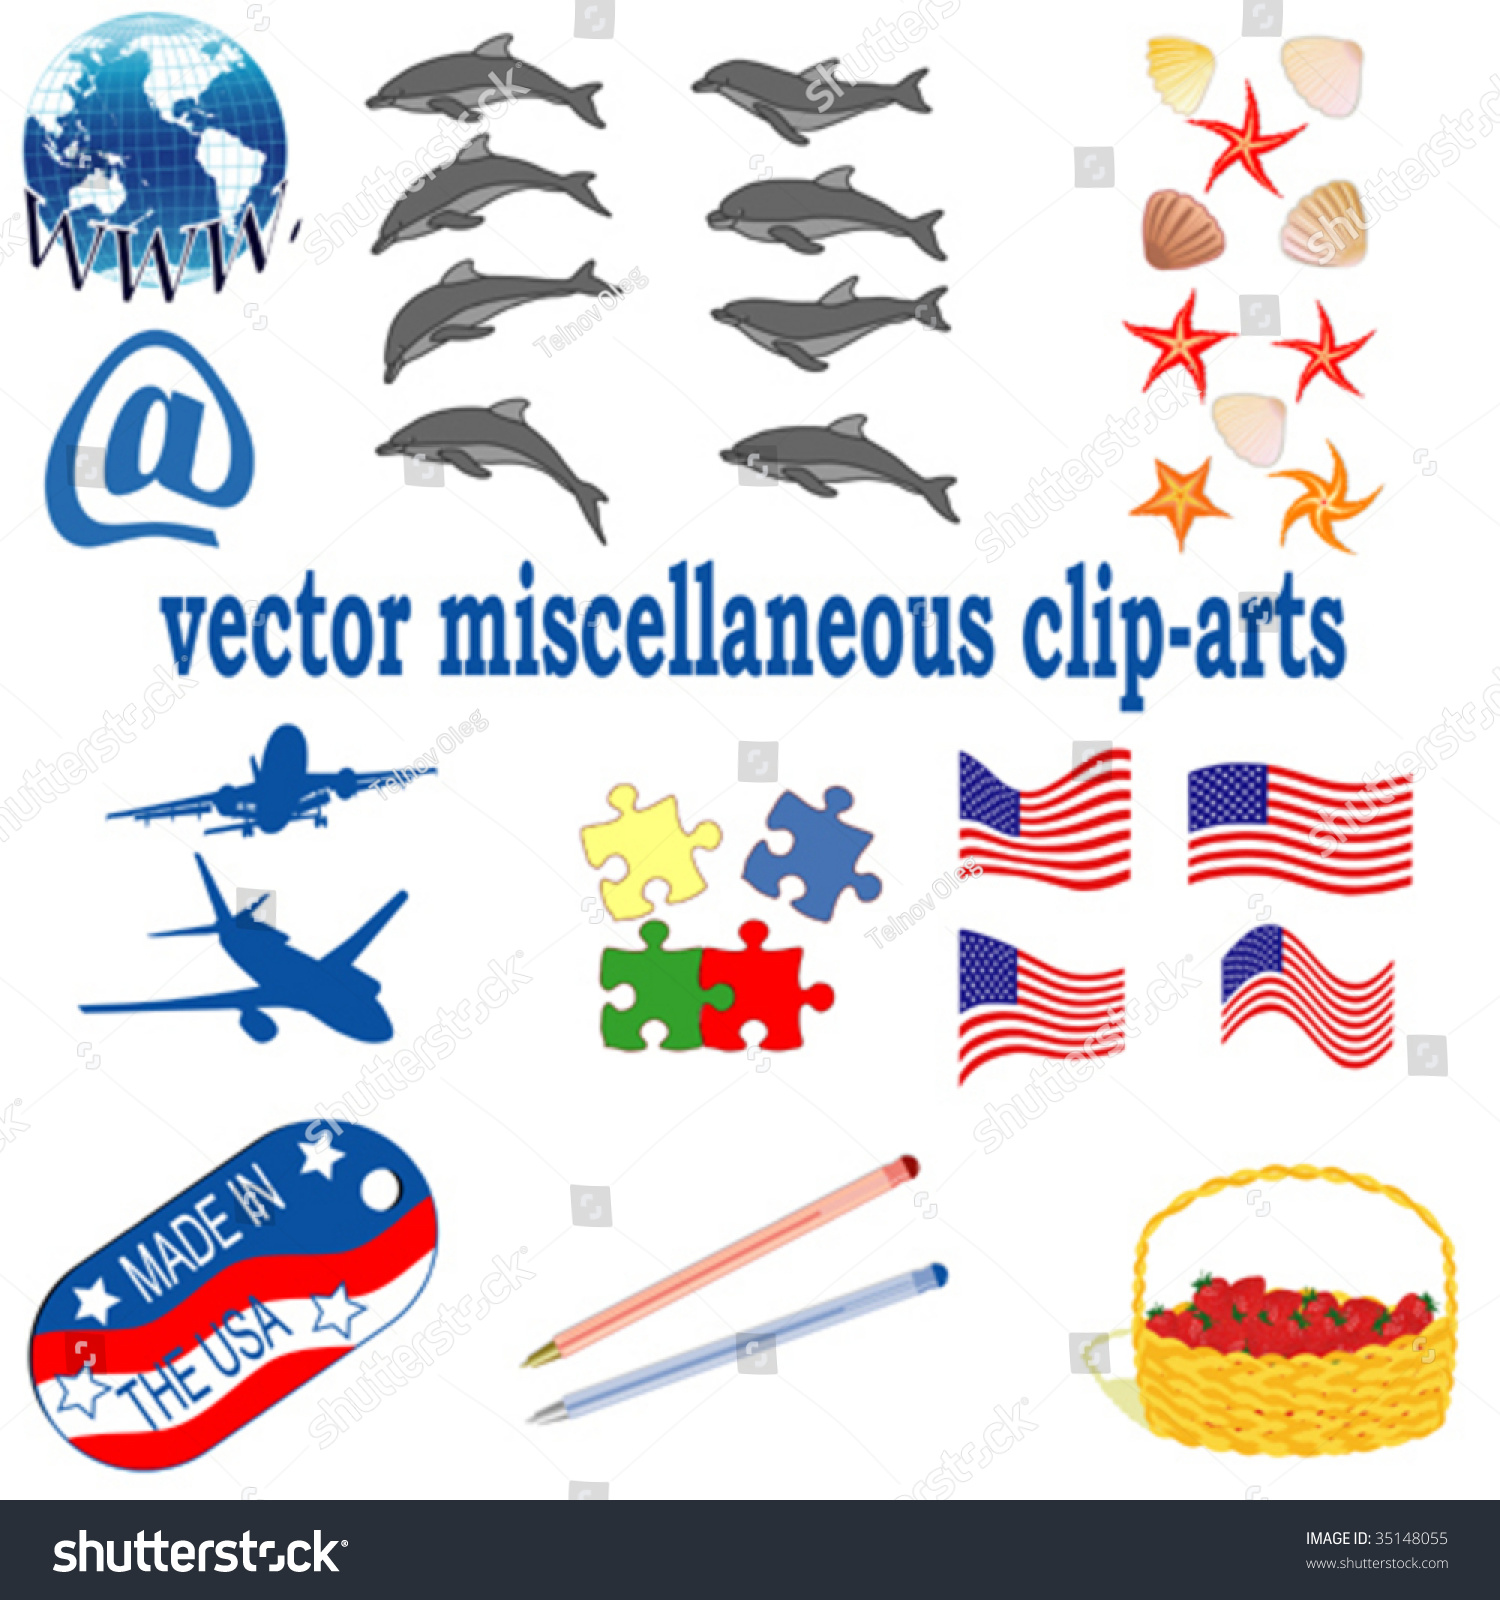 Edit Vectors Free Online vector collection 